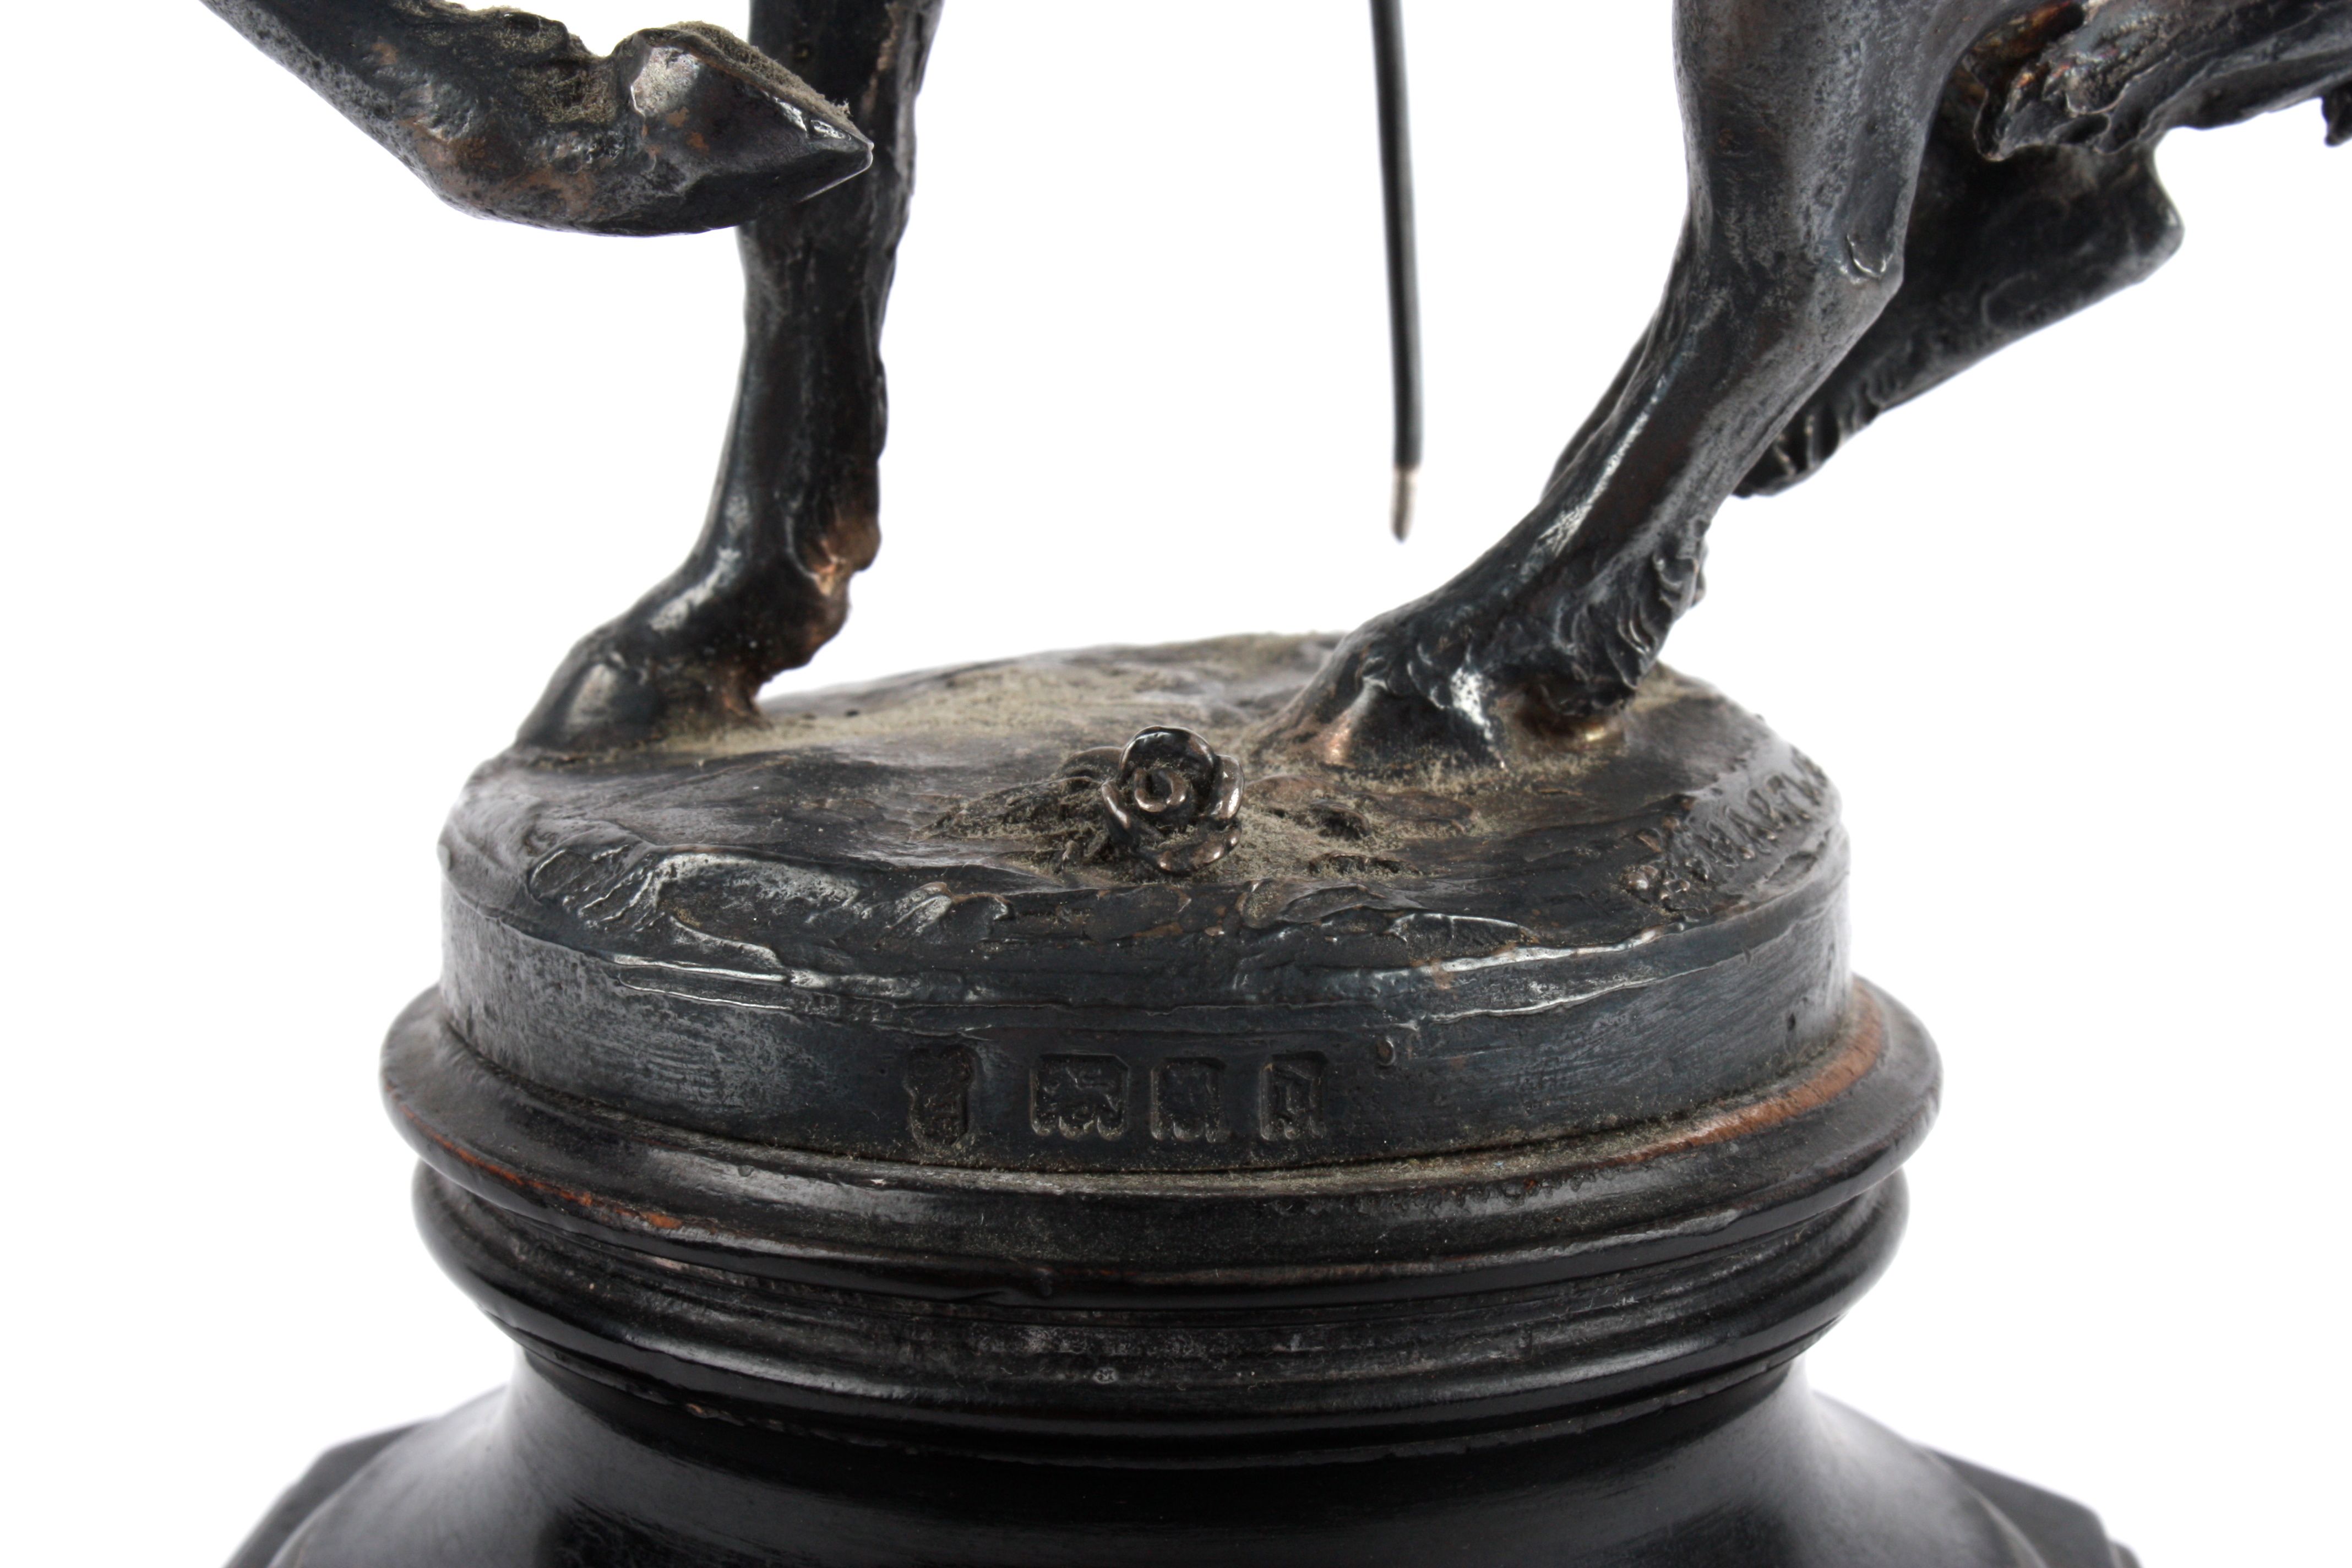 An Edwardian silver Knight on horseback figurine, London 1919 modelled as a knight on horseback - Image 4 of 4